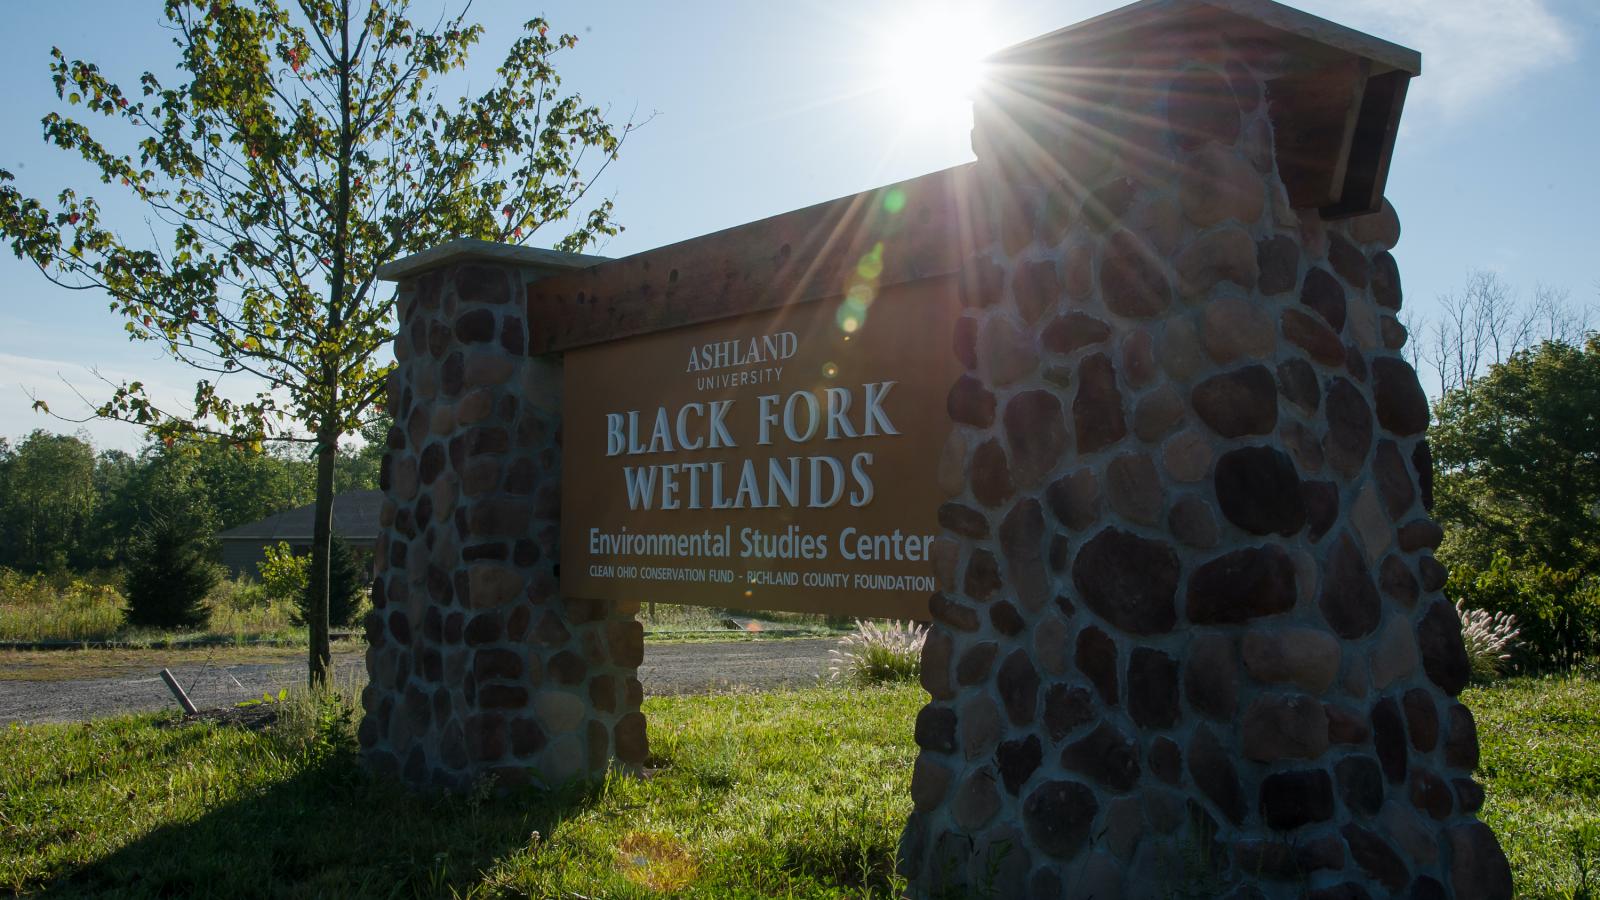 Black Fork Wetlands Environmental Studies Center